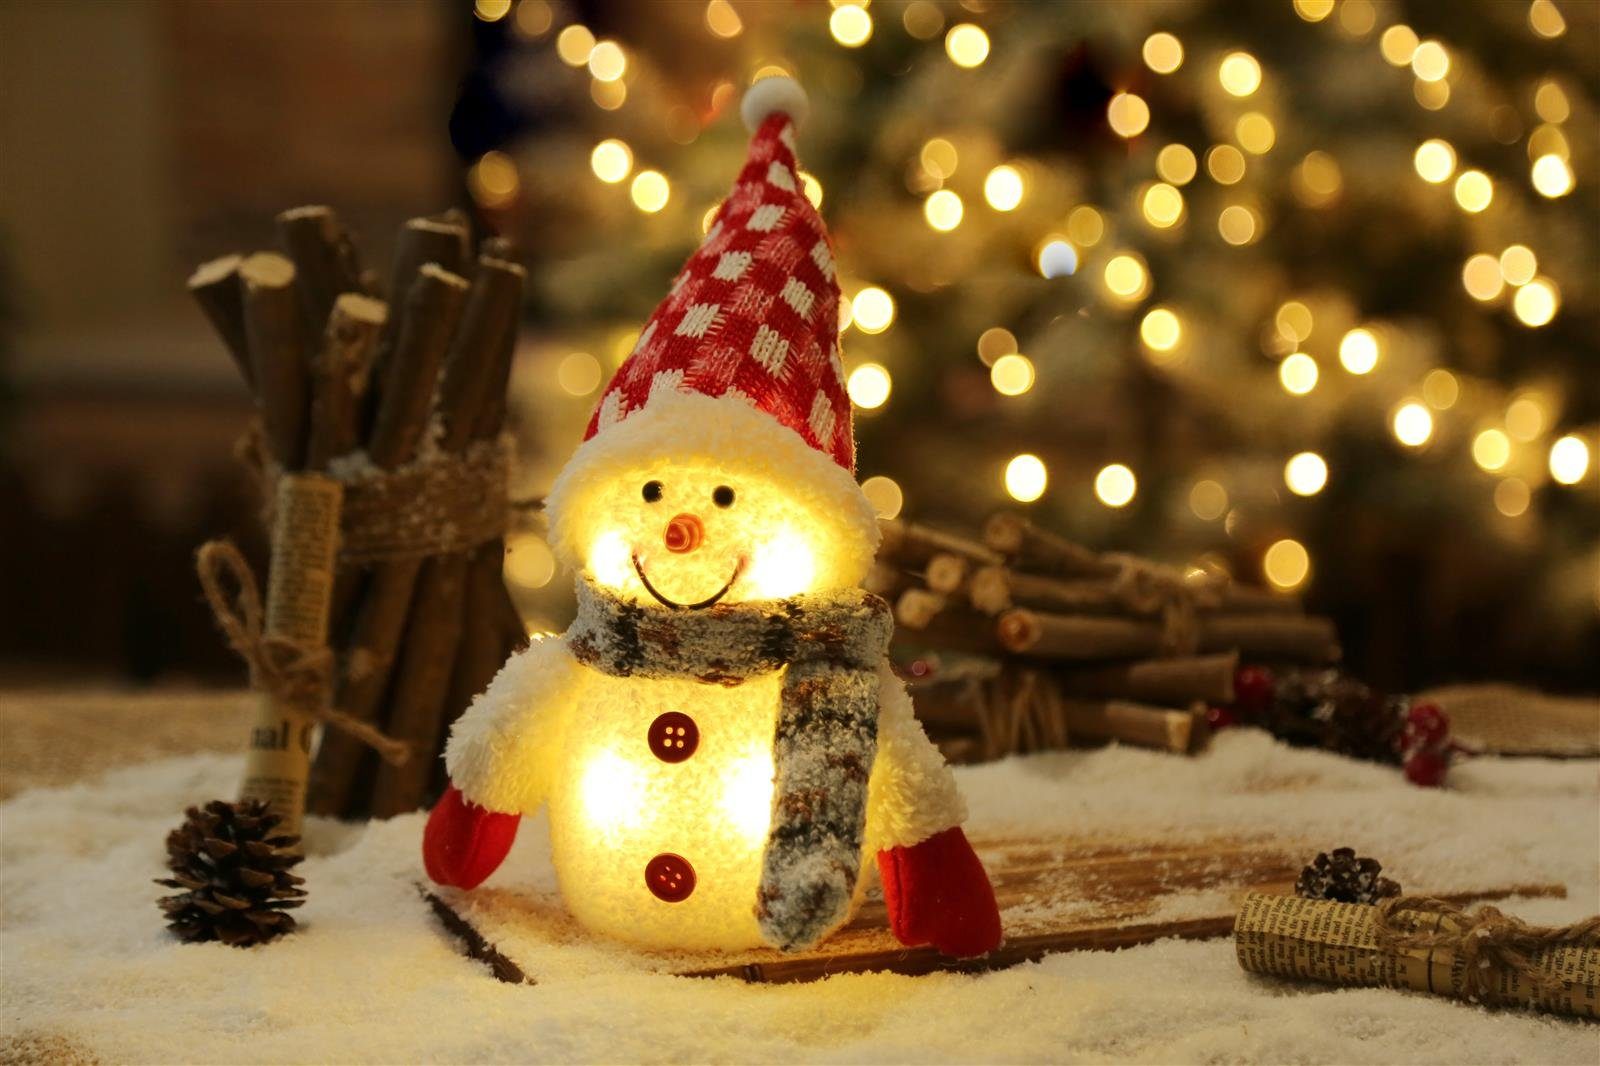 Schneemann Bambelaa! Beleuchtet LED "Snowy" Weihnachten Deko Figuren Weihnachtsfigur Weihnachten